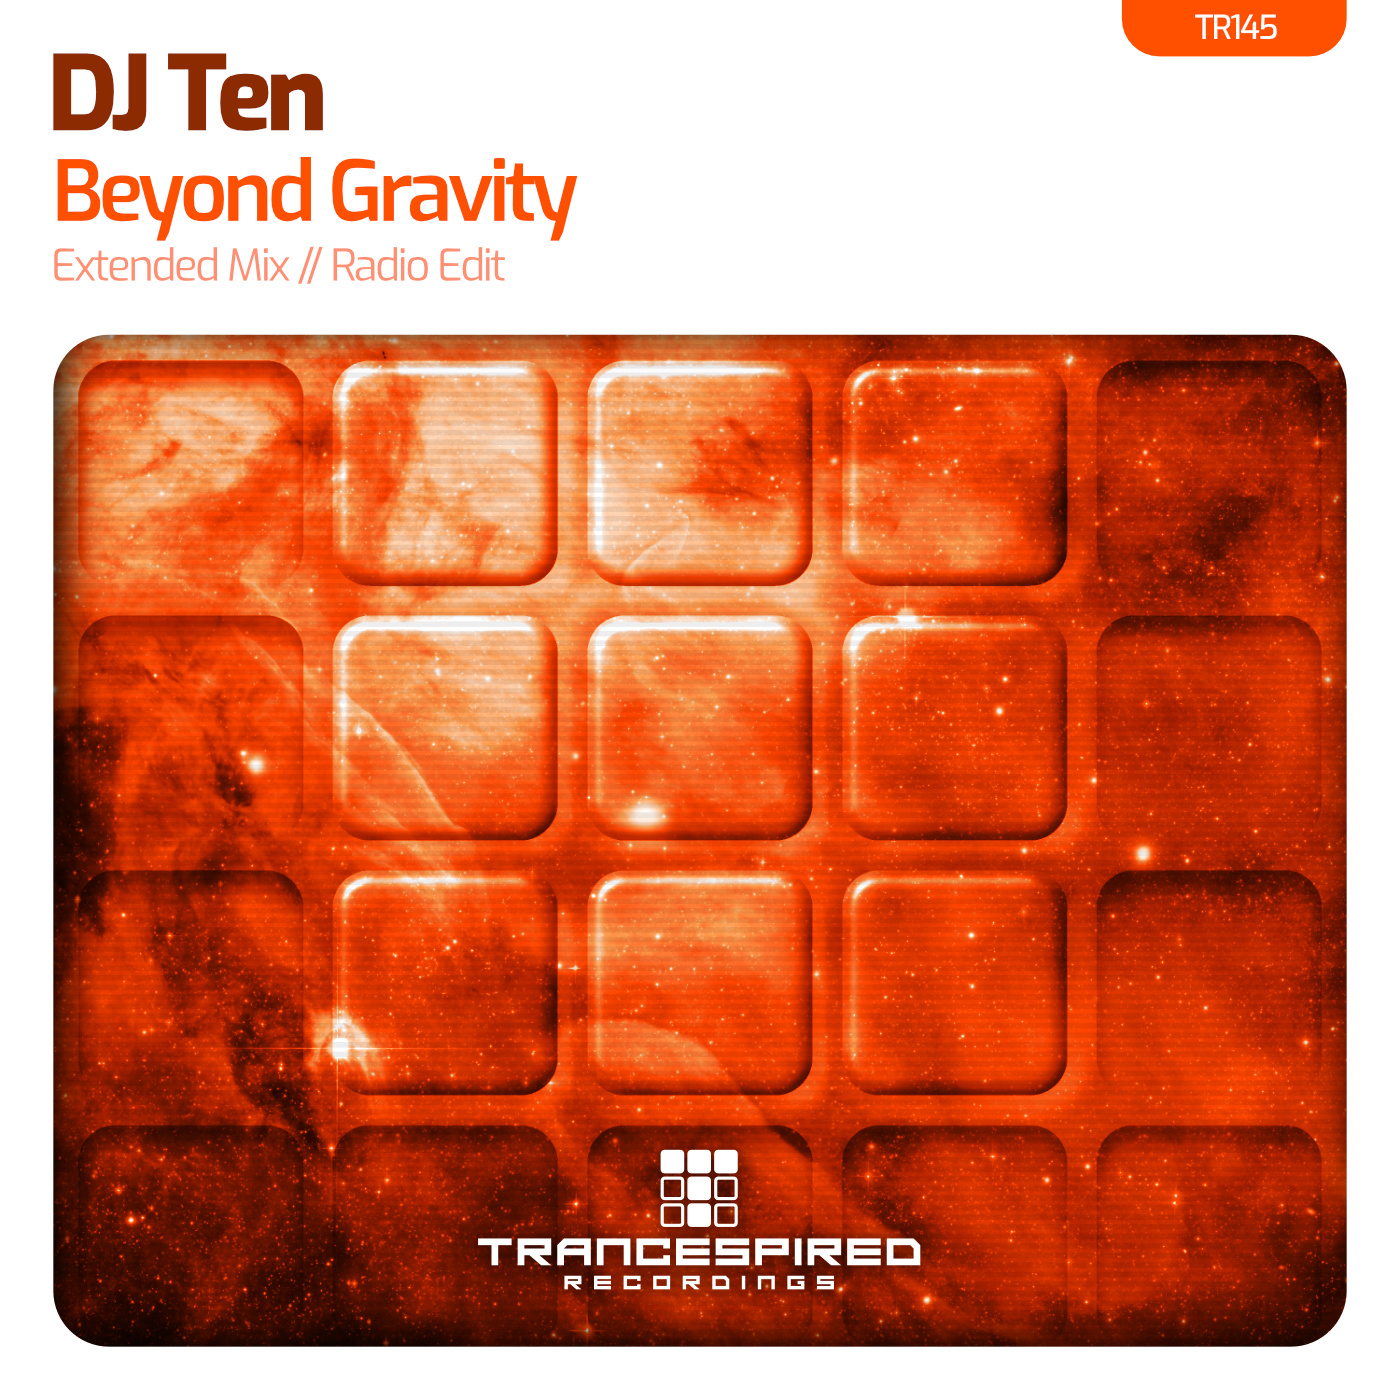 DJ Ten presents Beyond Gravity on Trancespired Recordings